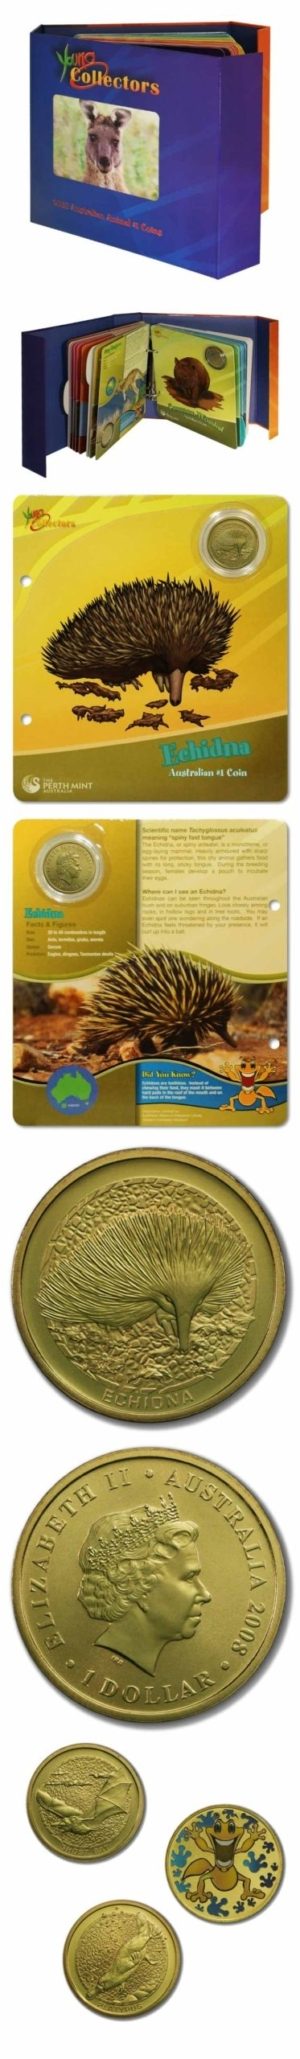 Australia - Young Collectors Wildlife Series - 12  $1 Coins - 2008 - Album